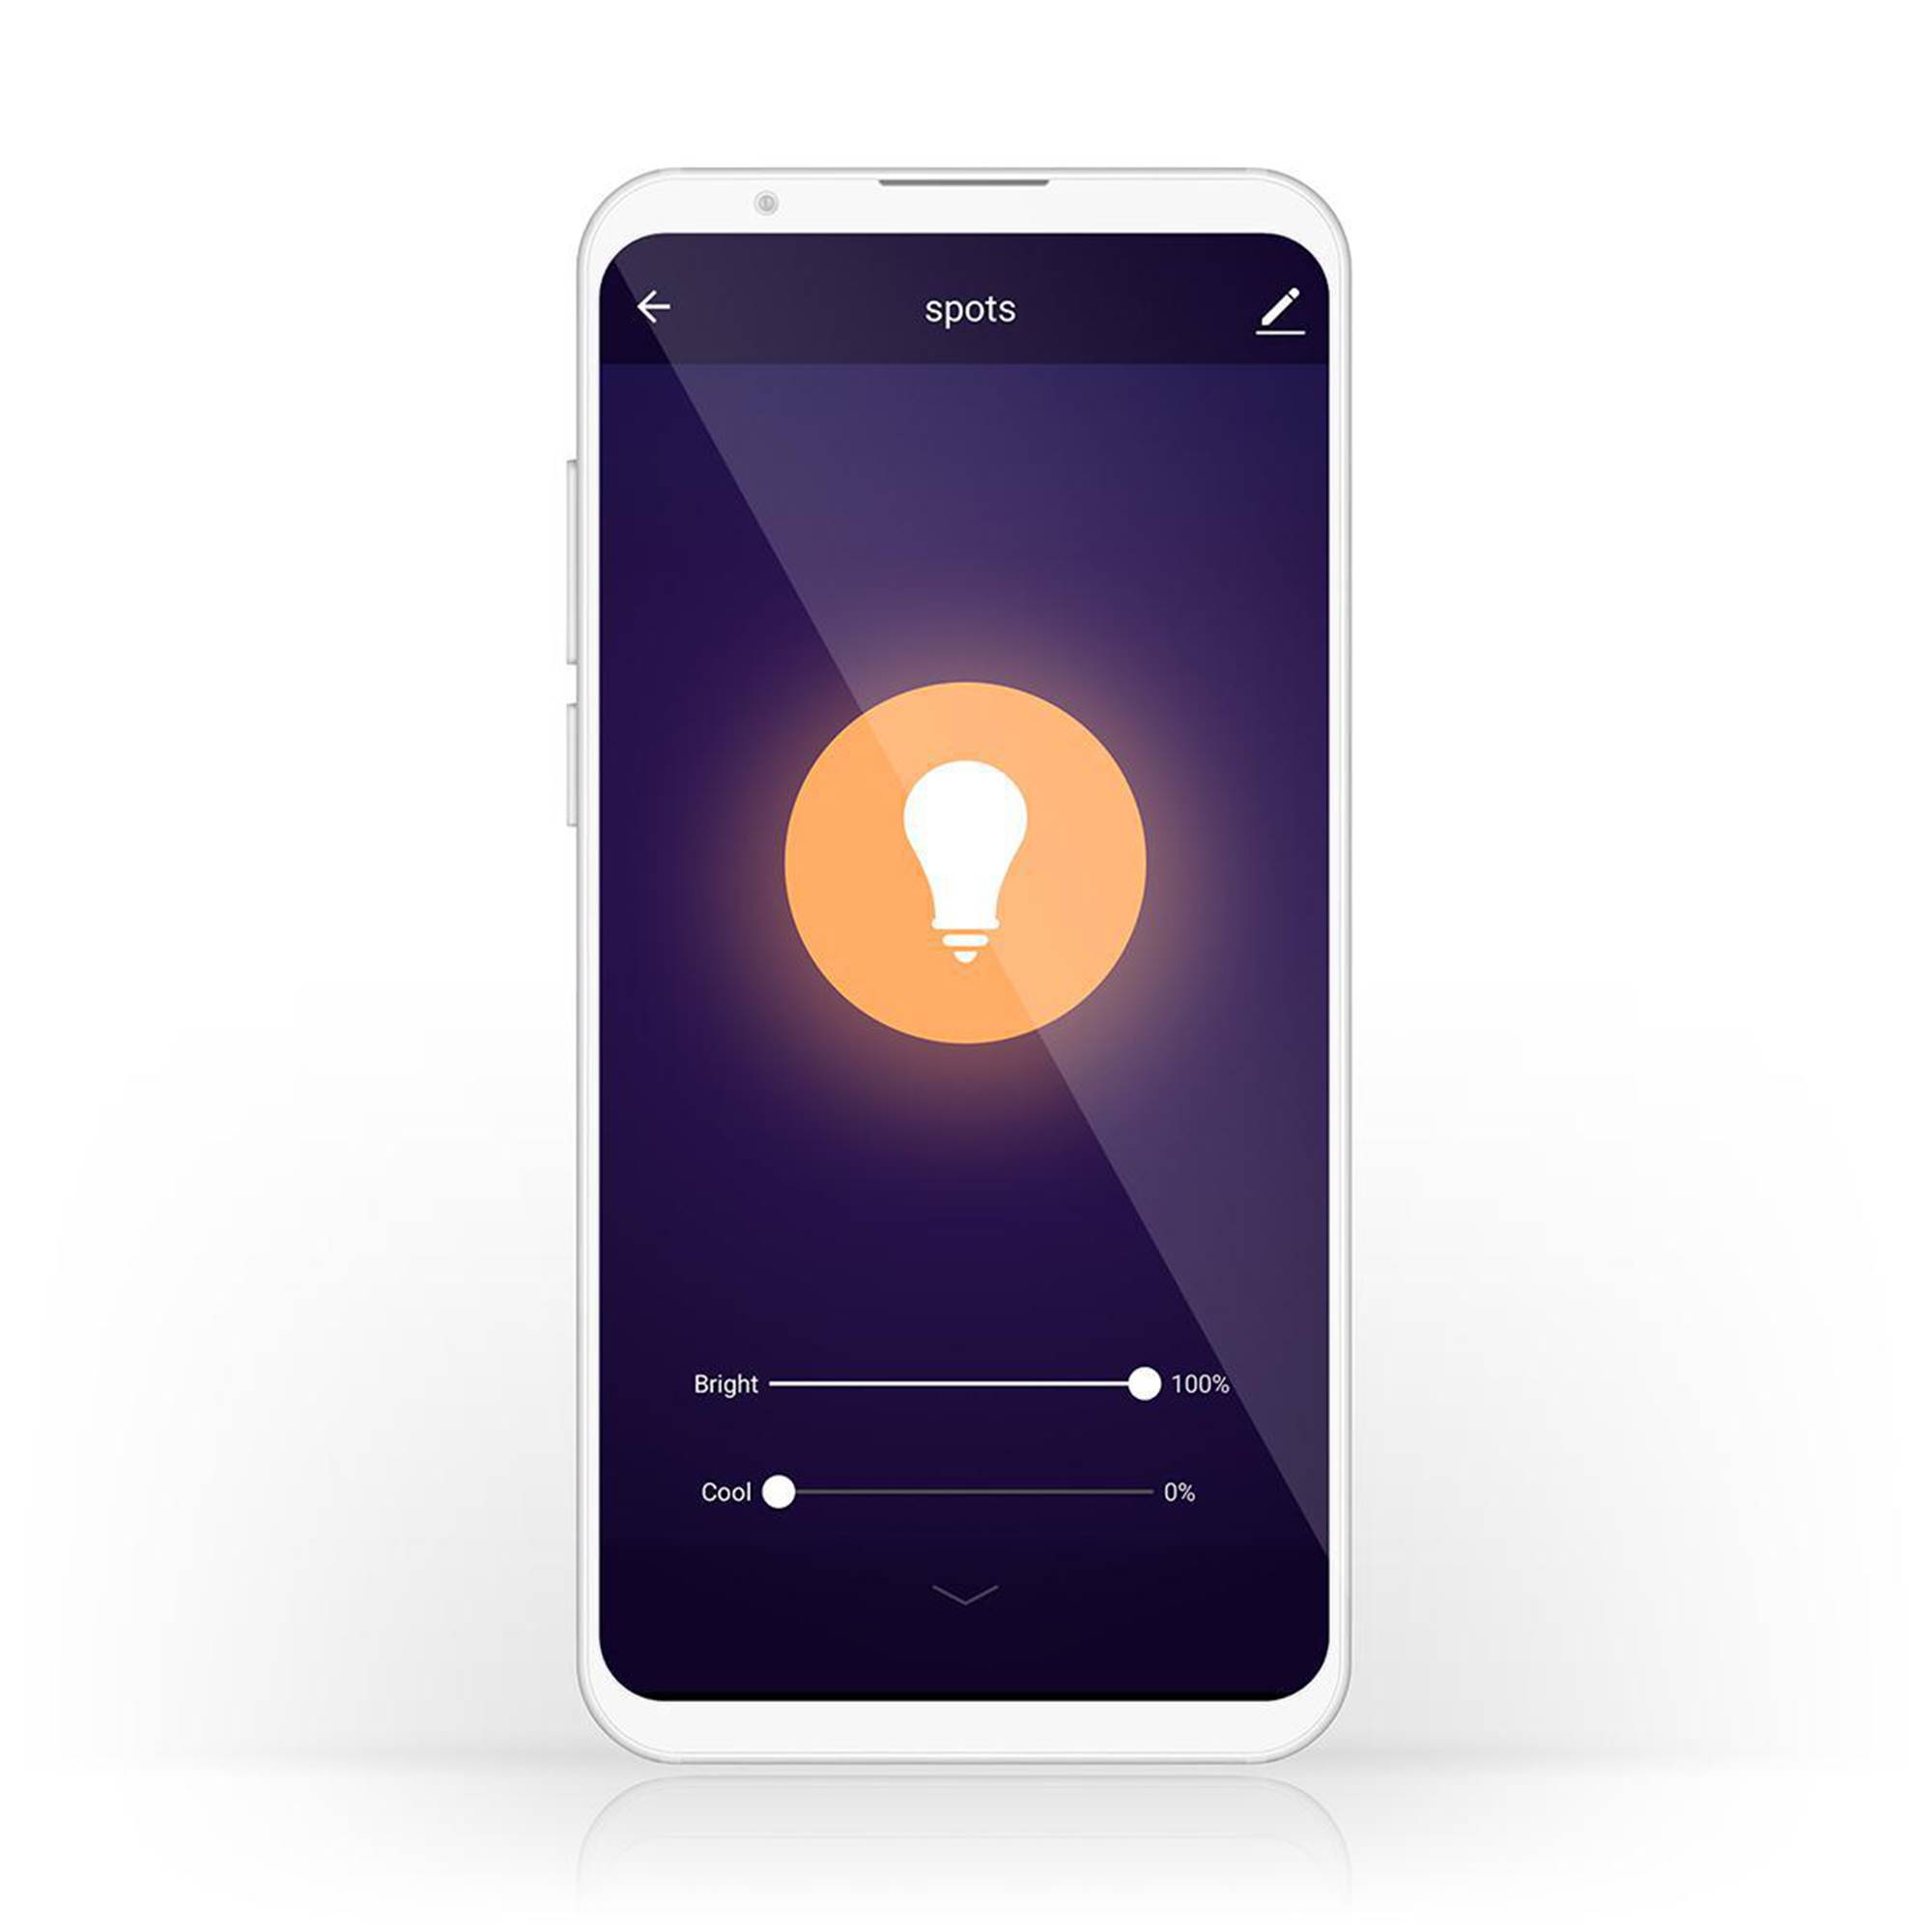 SmartLife LED Bulb , Wi-Fi , E27 , 800 lm , 9 W , Kall Vit / Varm Vit , 2700 - 6500 K , Energiklass: A+ , Android/ IOS , A60